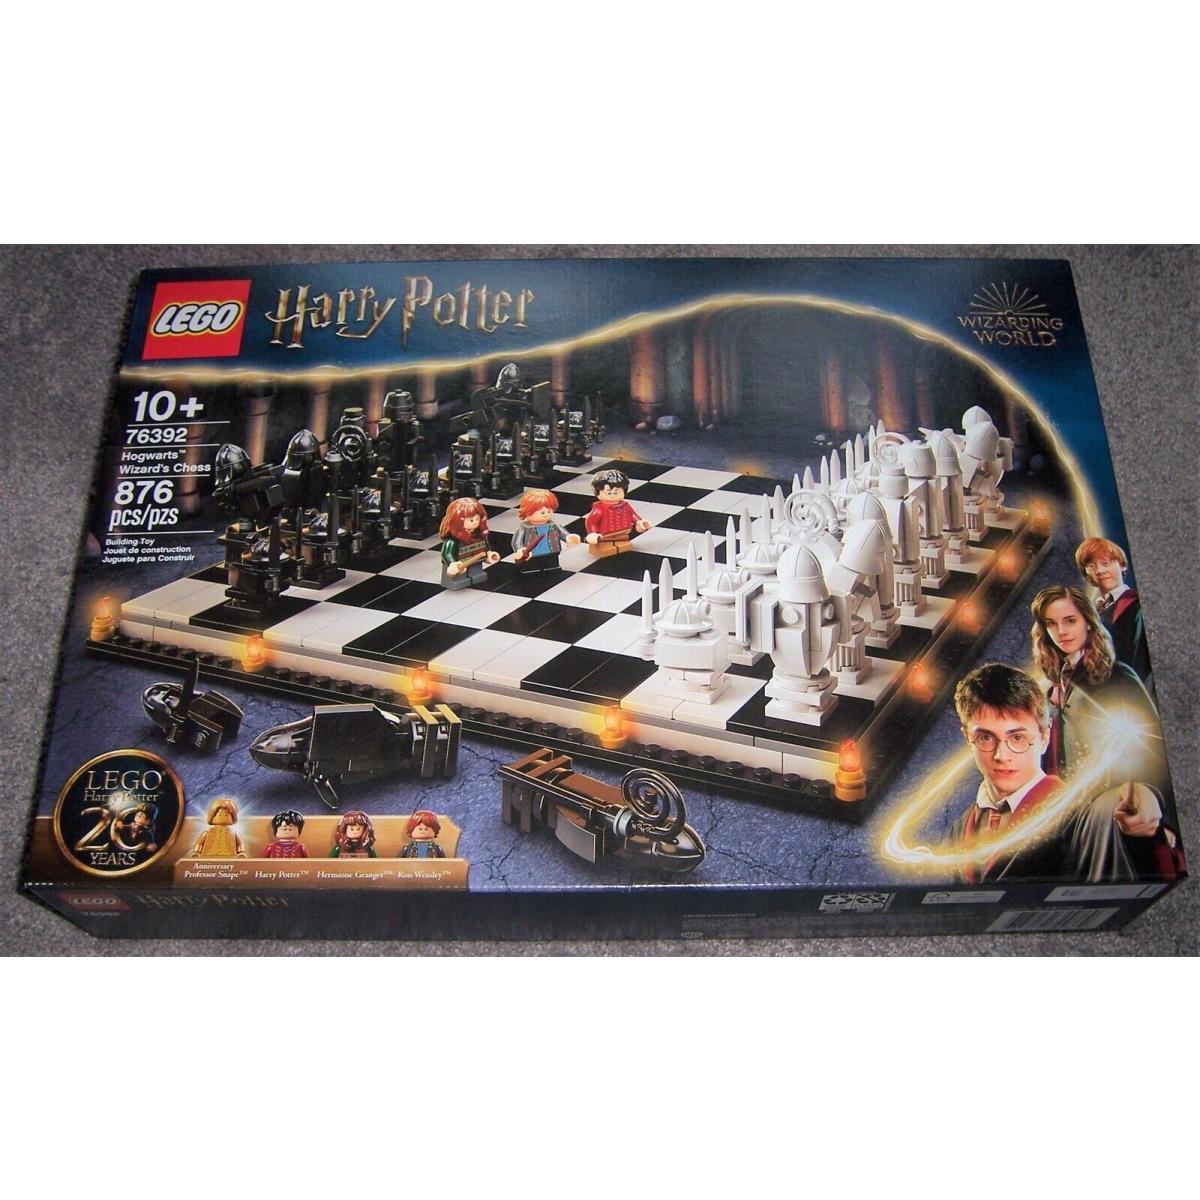 Lego Harry Potter Wizard Chess 76392 Building Set Professor Snape Gold